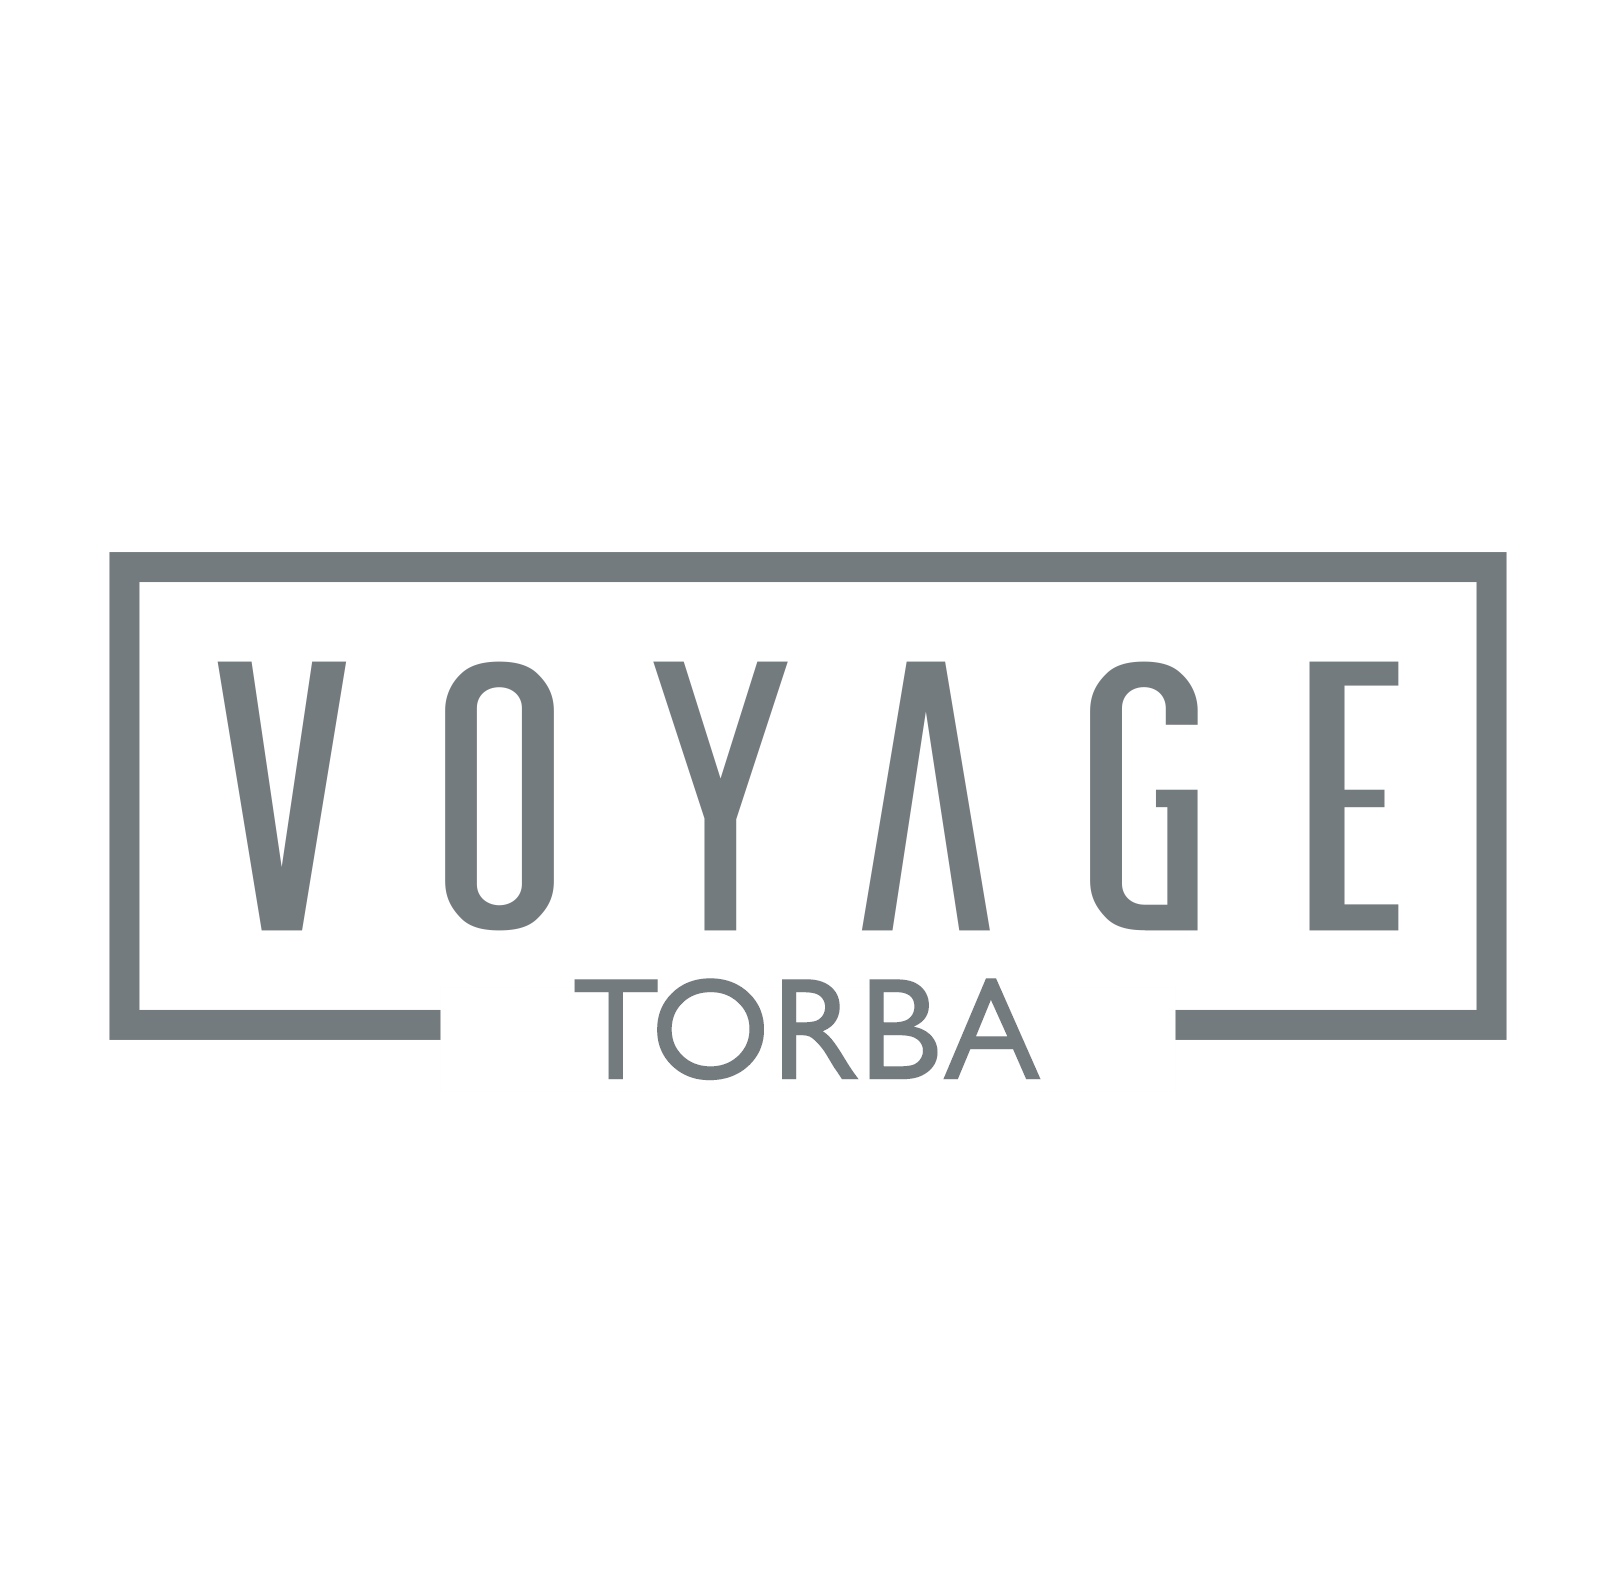 VOYAGE TORBA